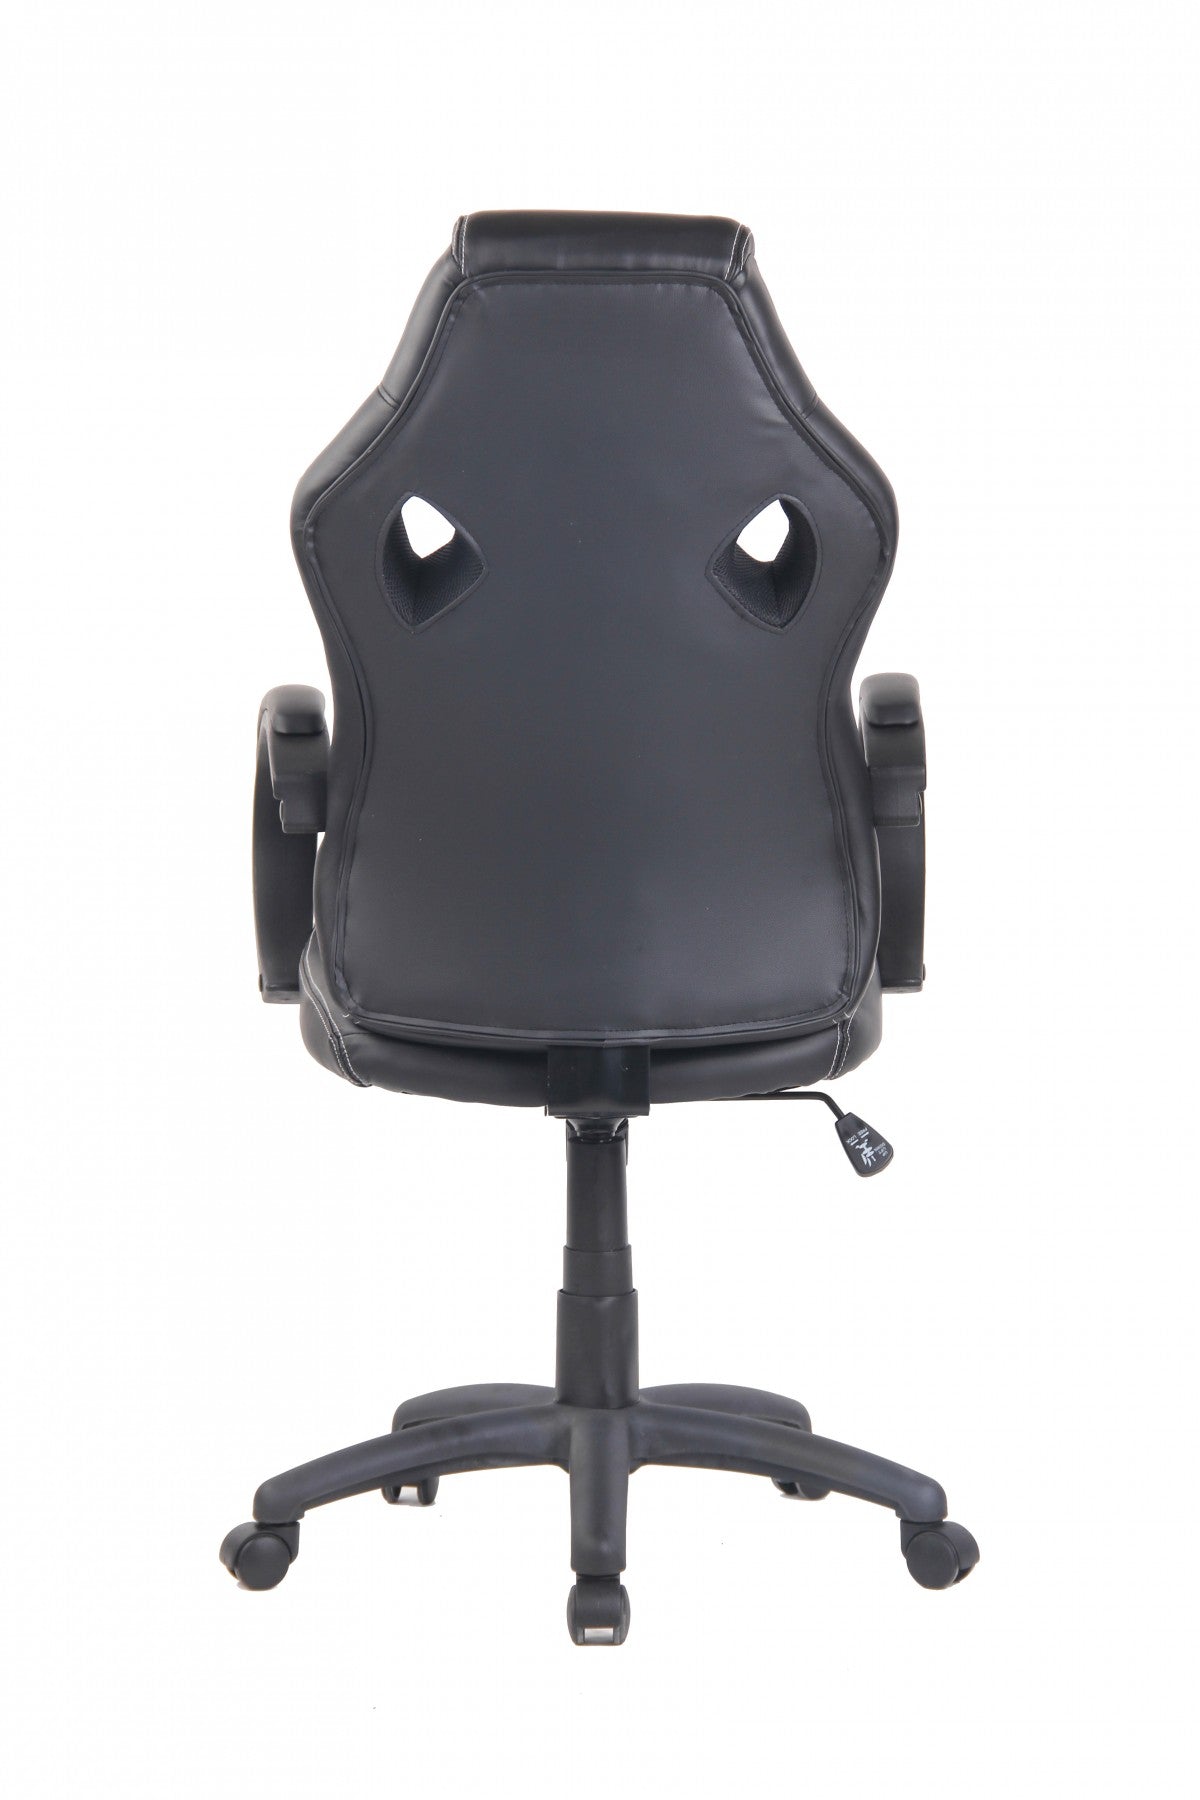 Office Chair Black/Blue 3801